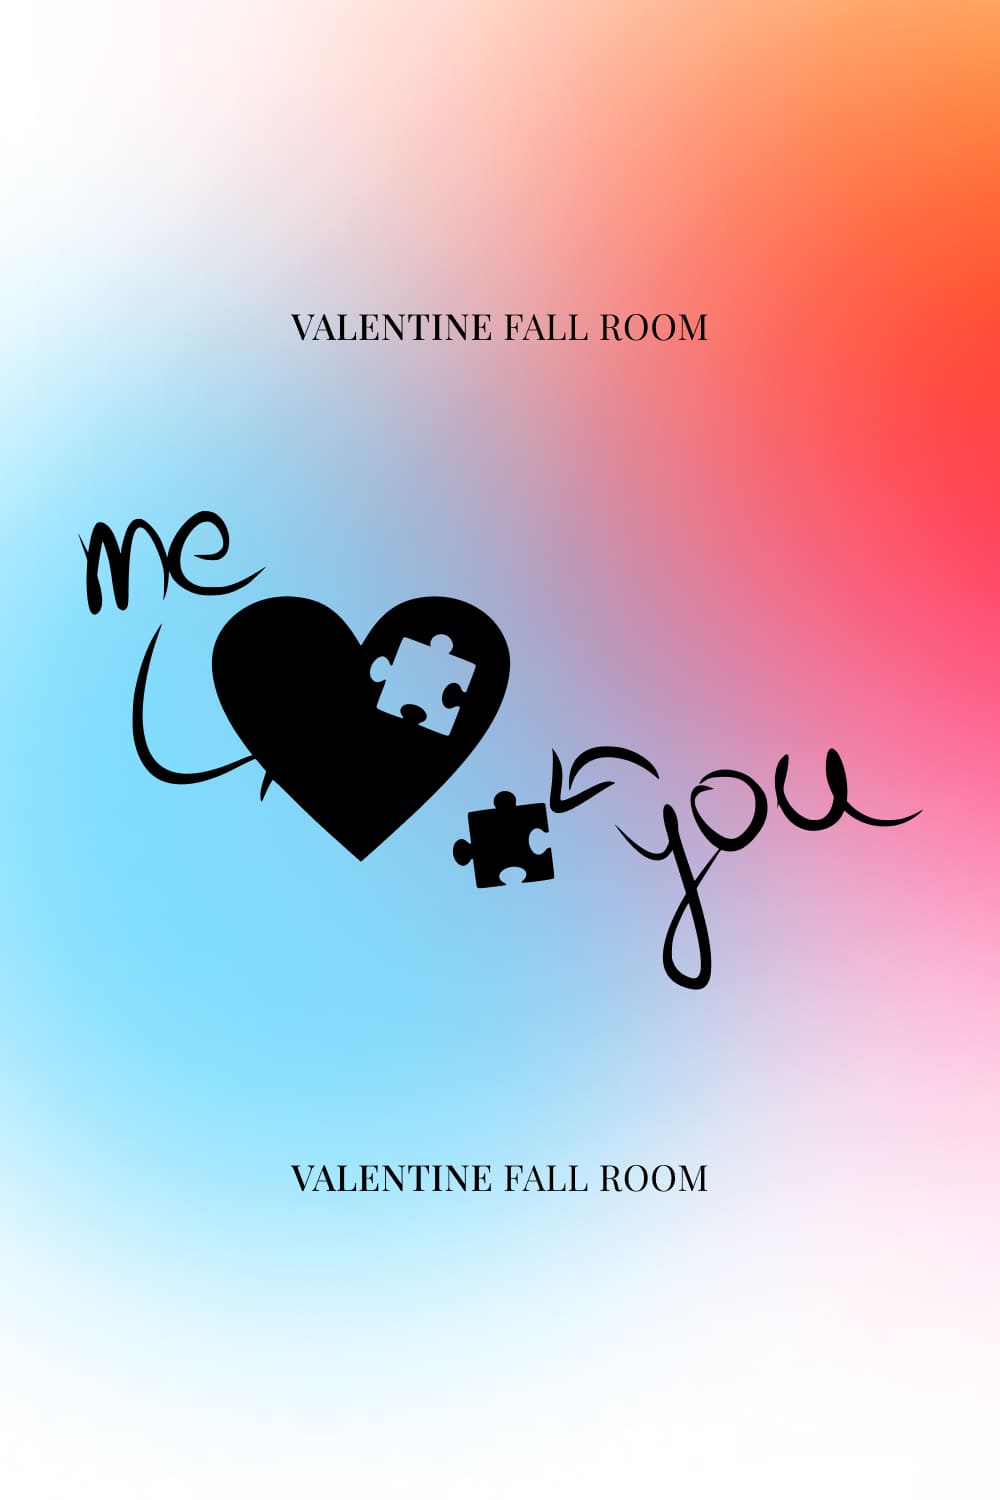 Valentine's Valentine Fall Room - Pinterest Image.